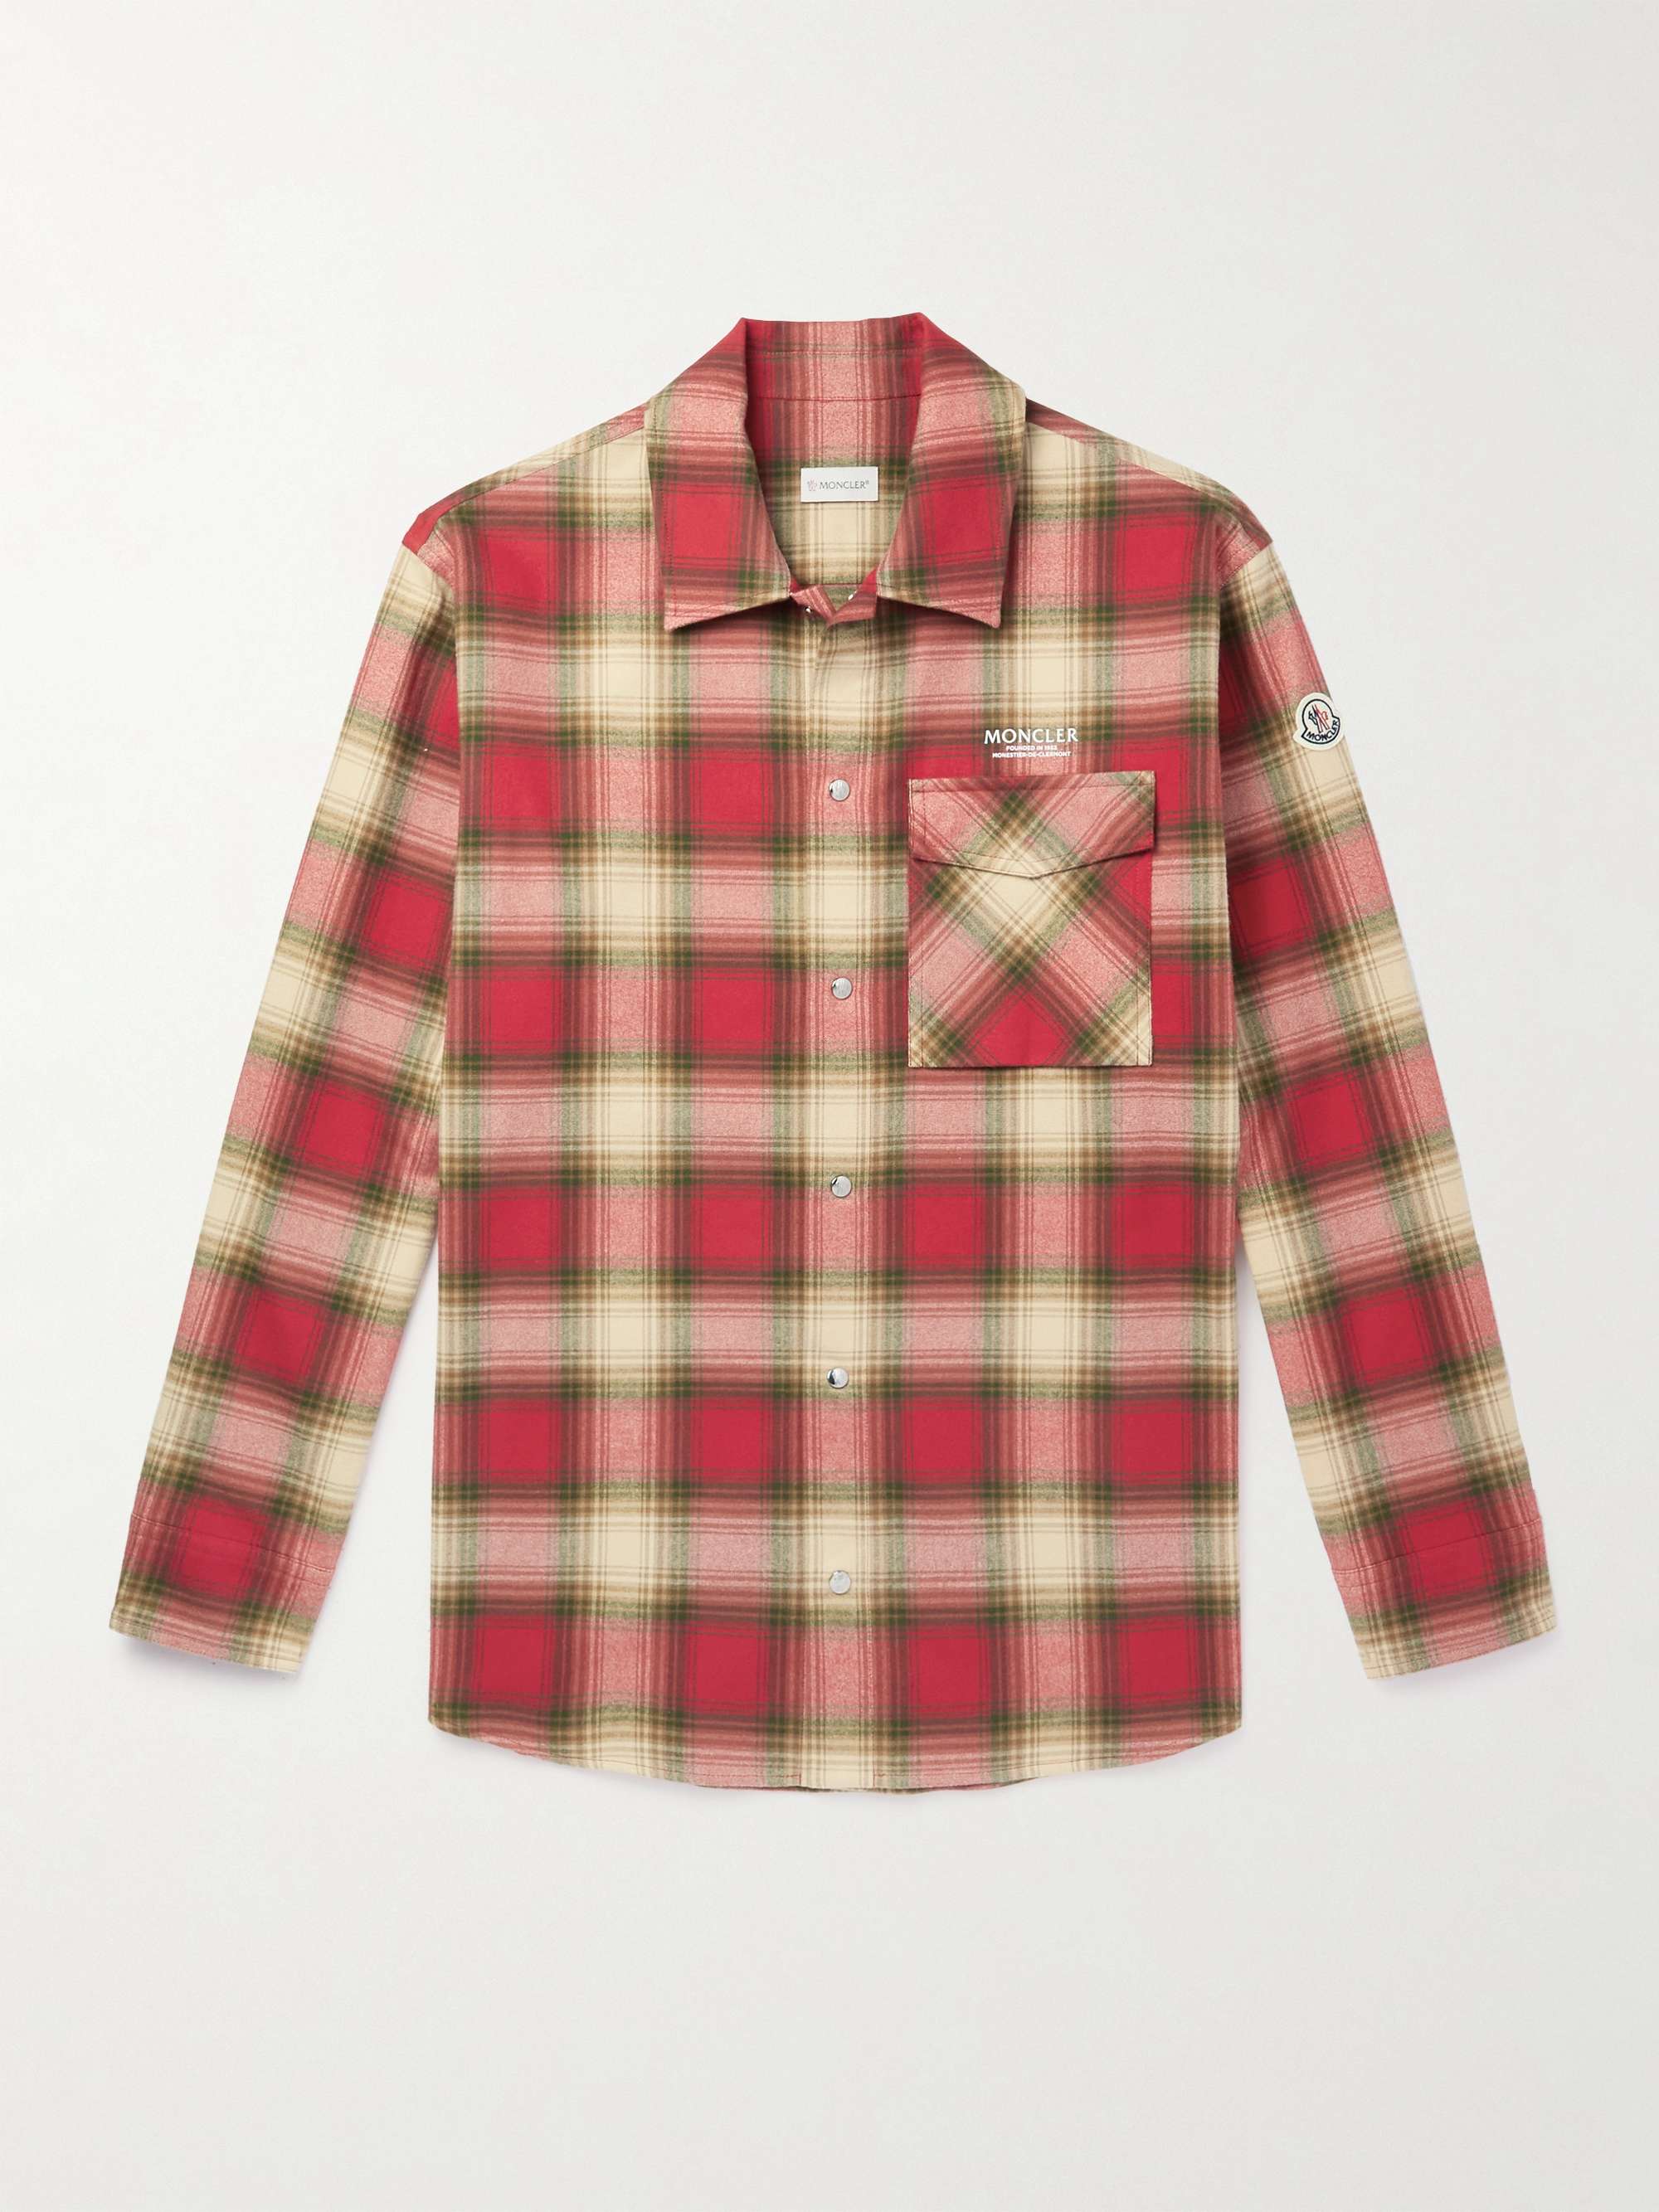 MONCLER Checked Cotton-Flannel Shirt for Men | MR PORTER